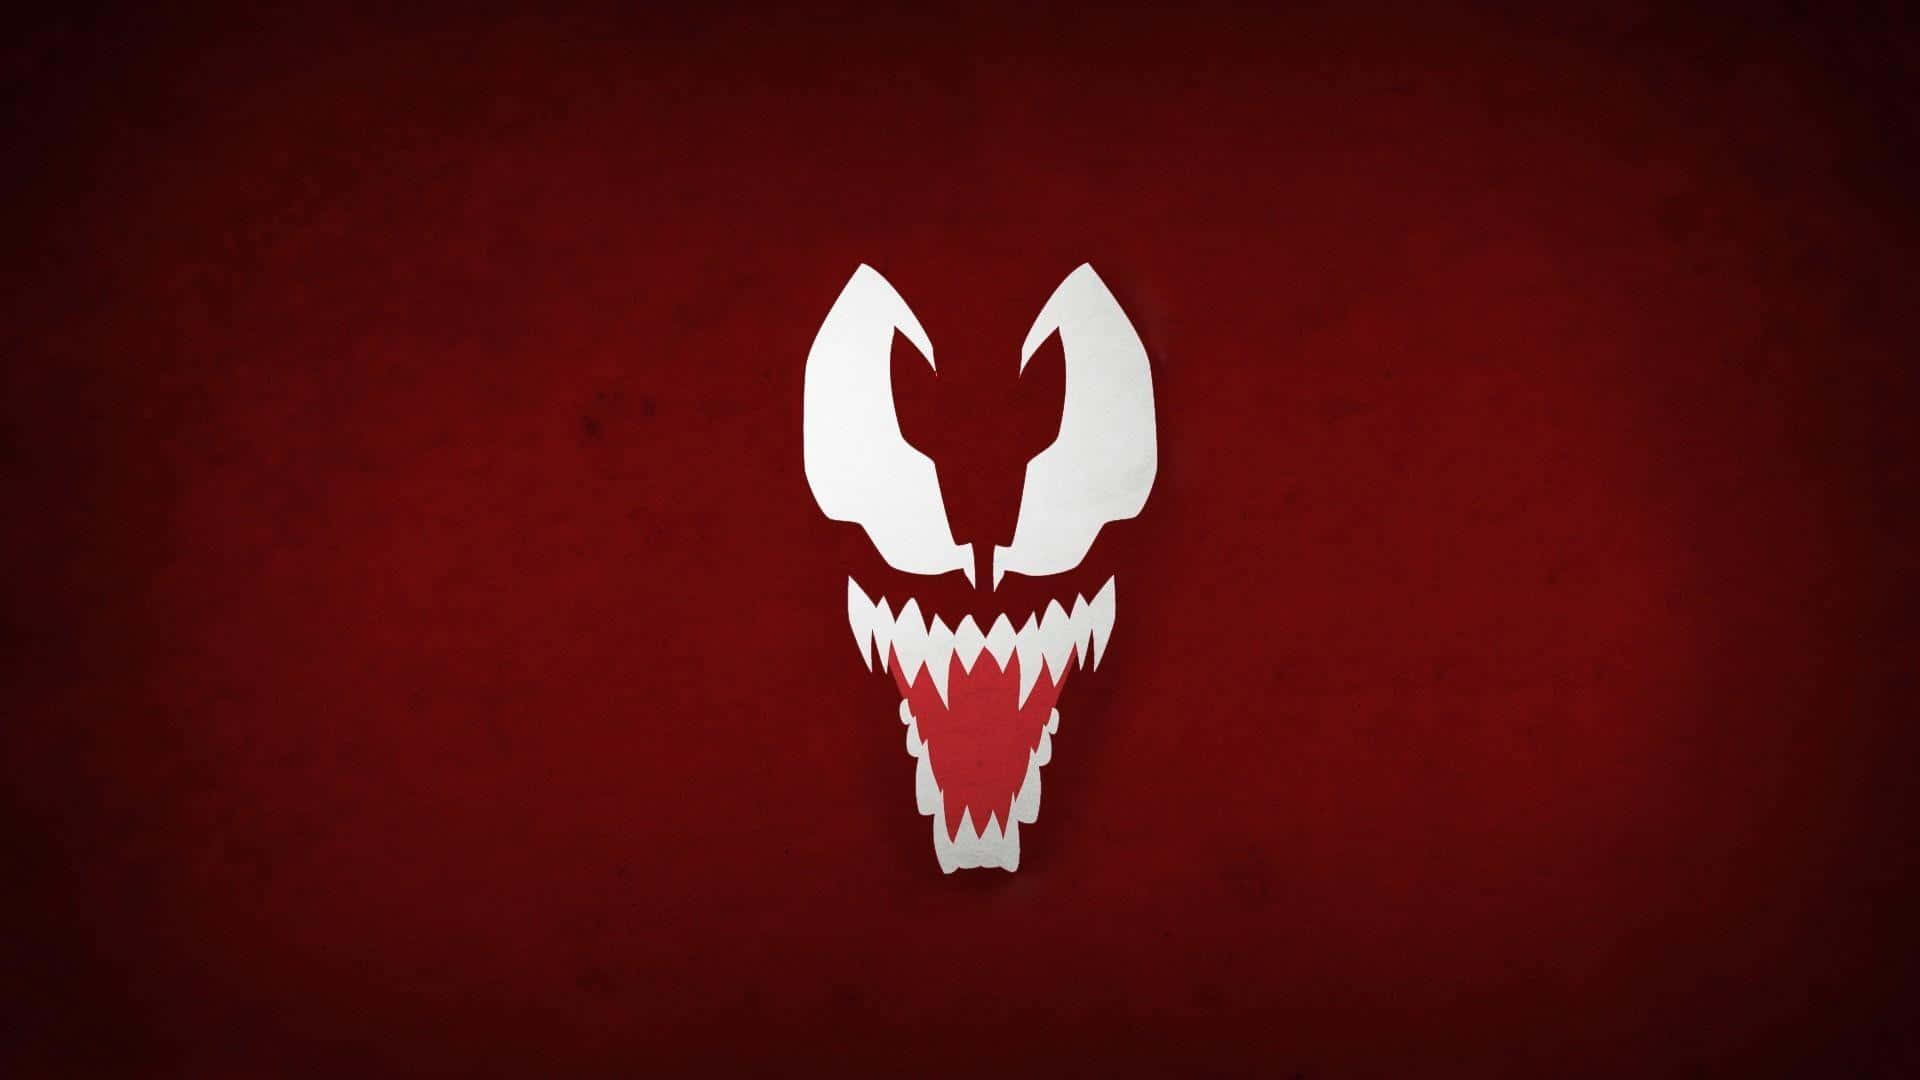 Venom Logo On A Red Background Wallpaper